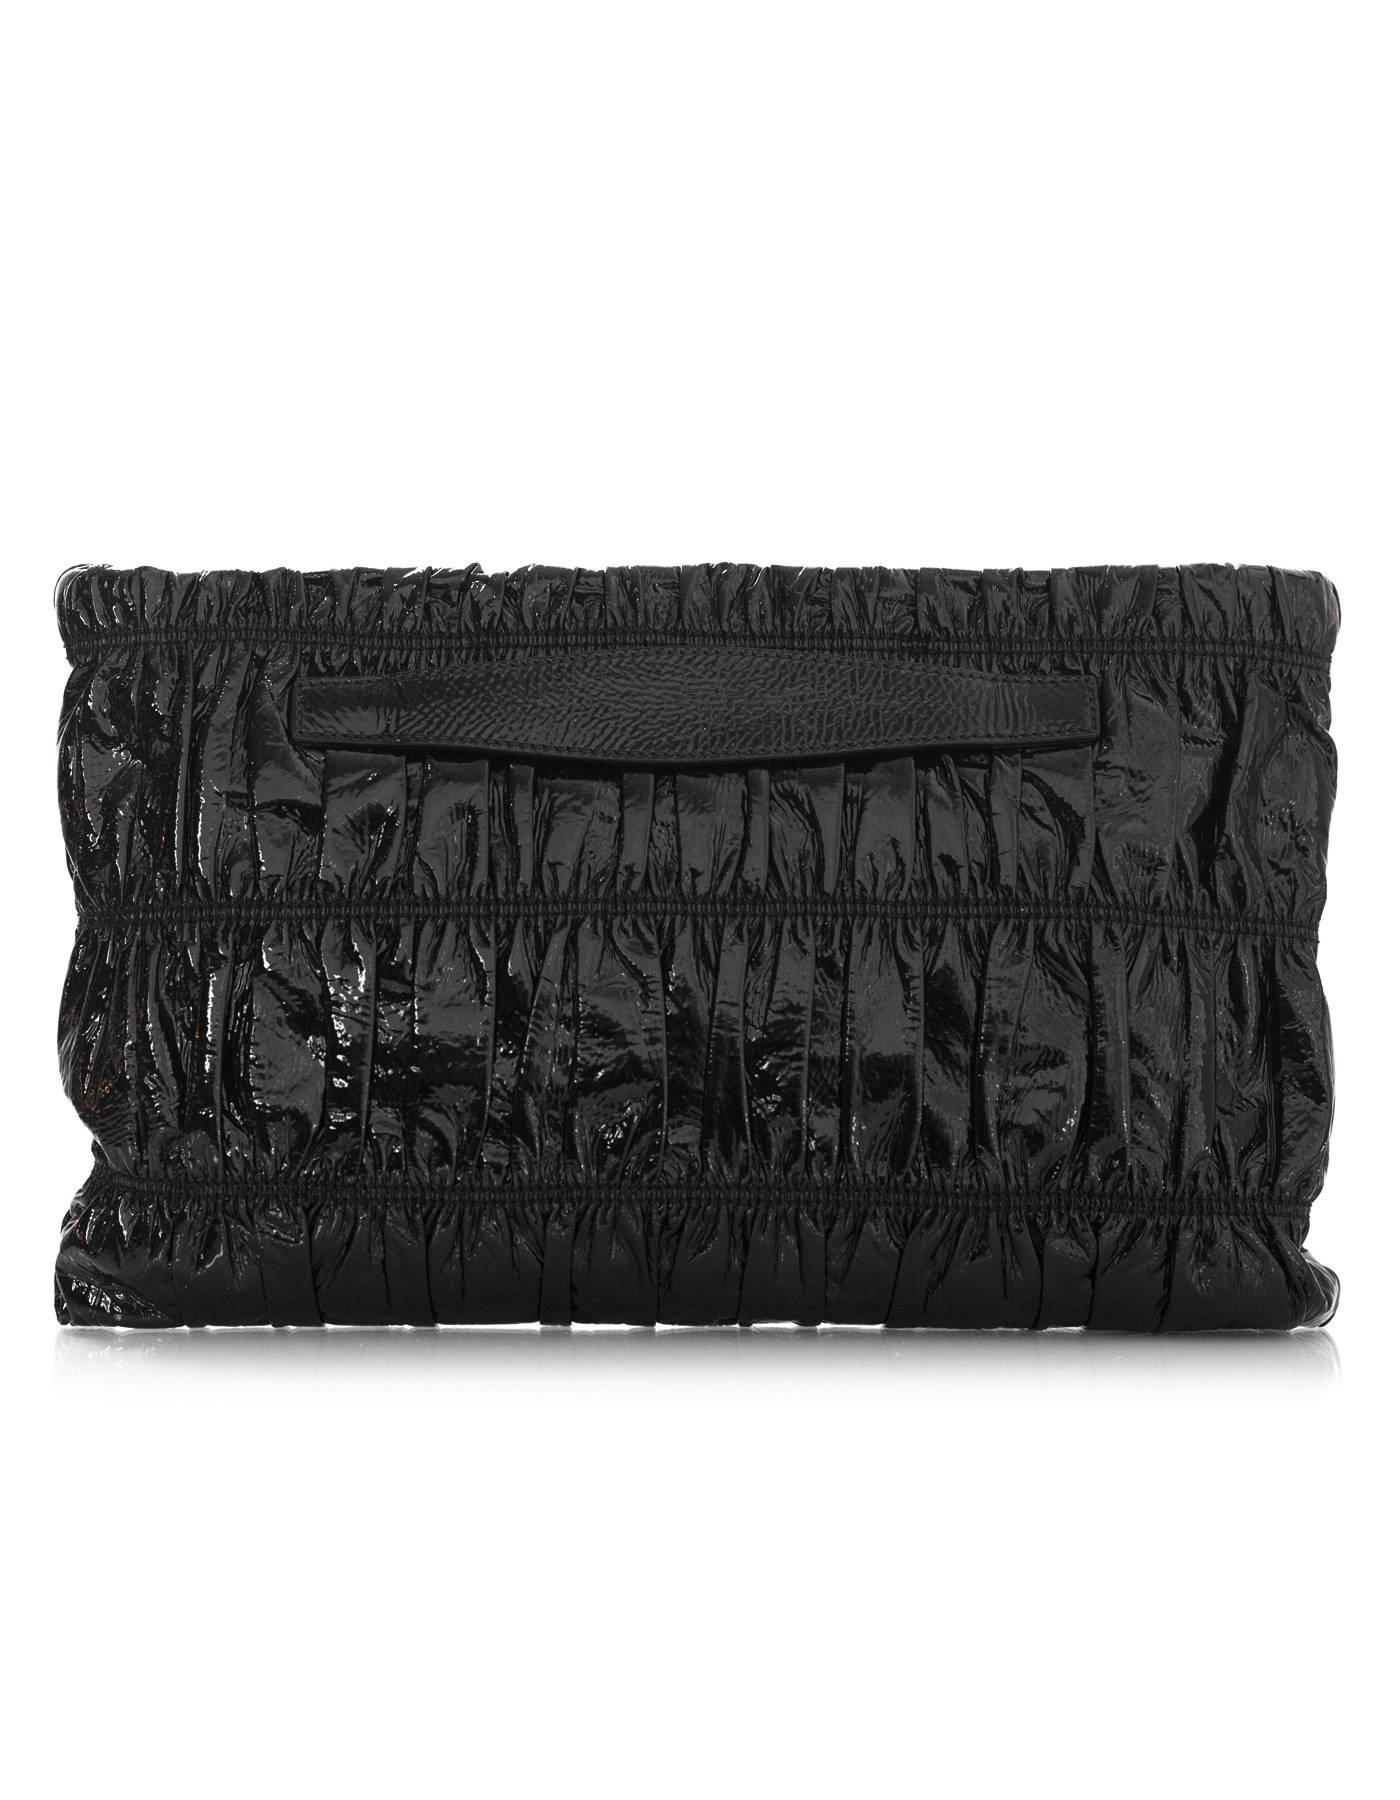 black patent leather clutch bag